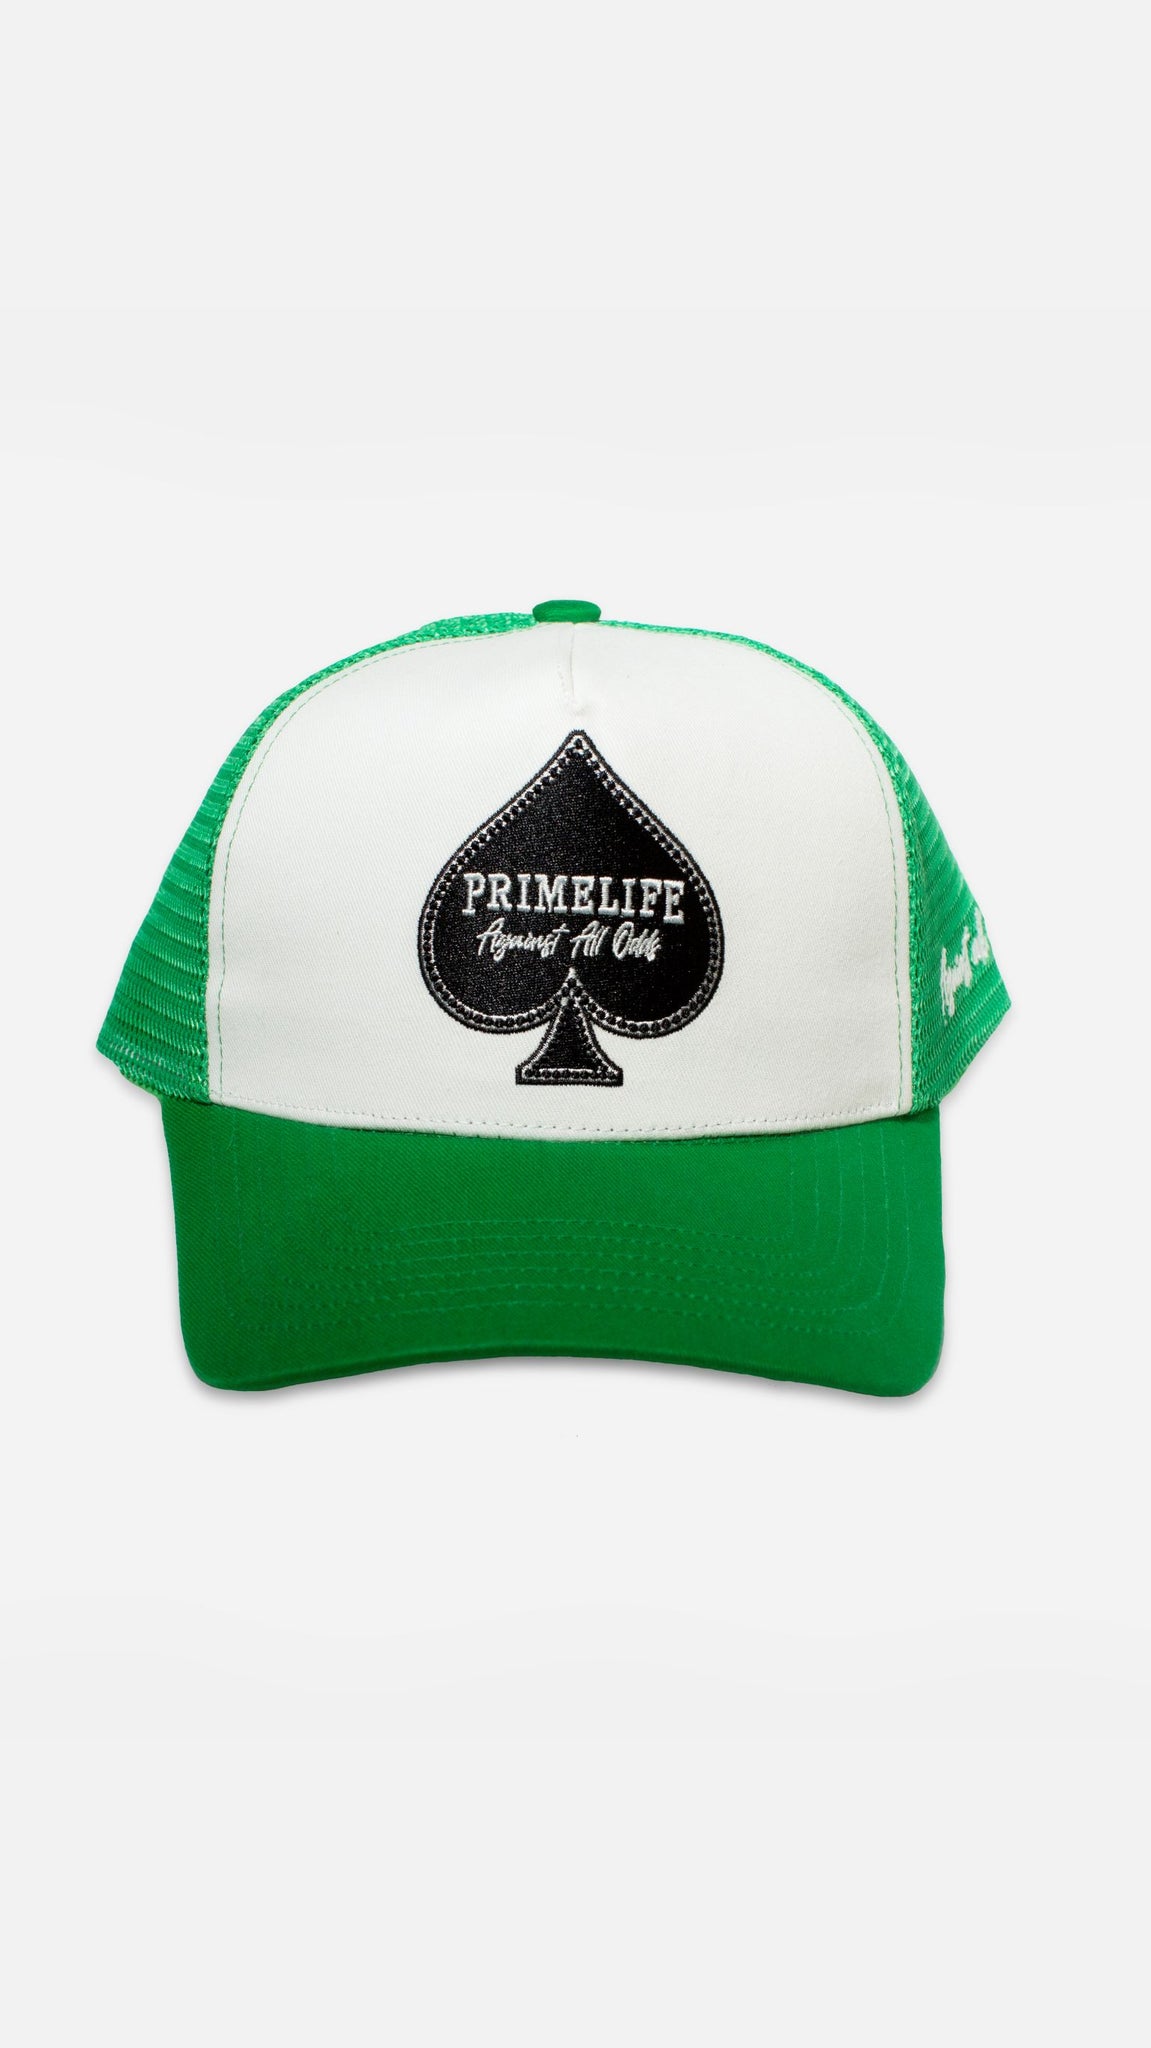 Players Club Trucker Hats [Green]